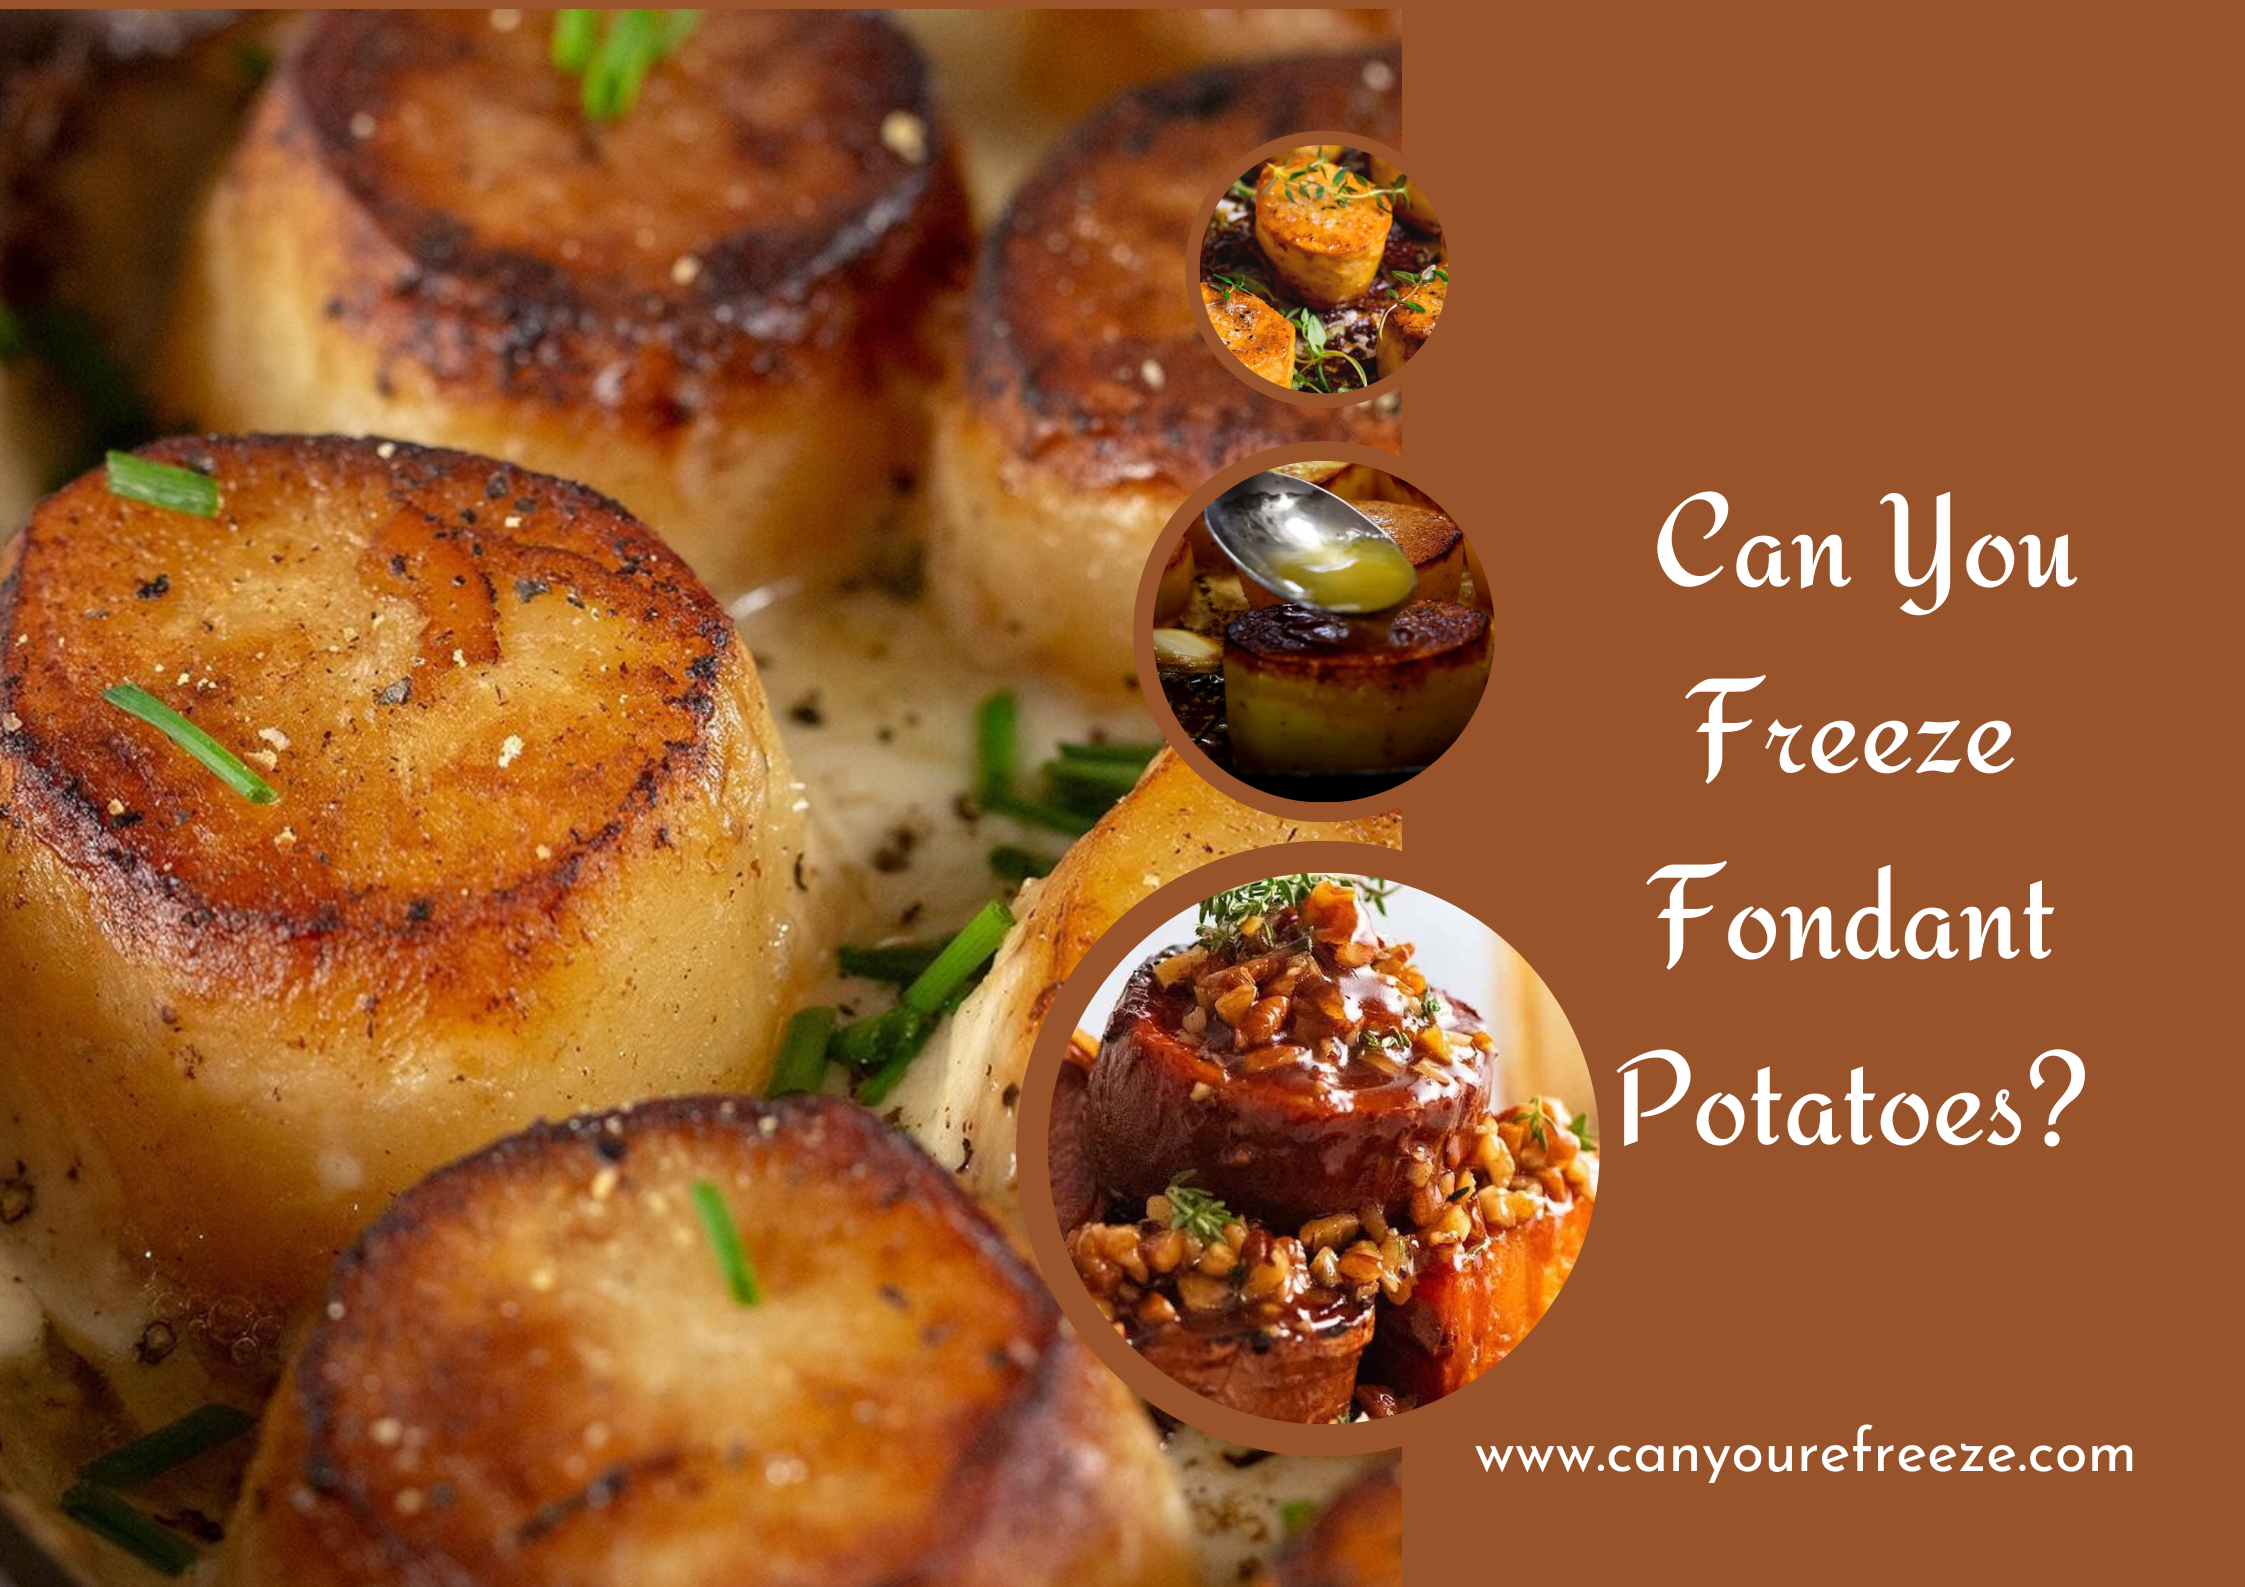 Can You Freeze Fondant Potatoes